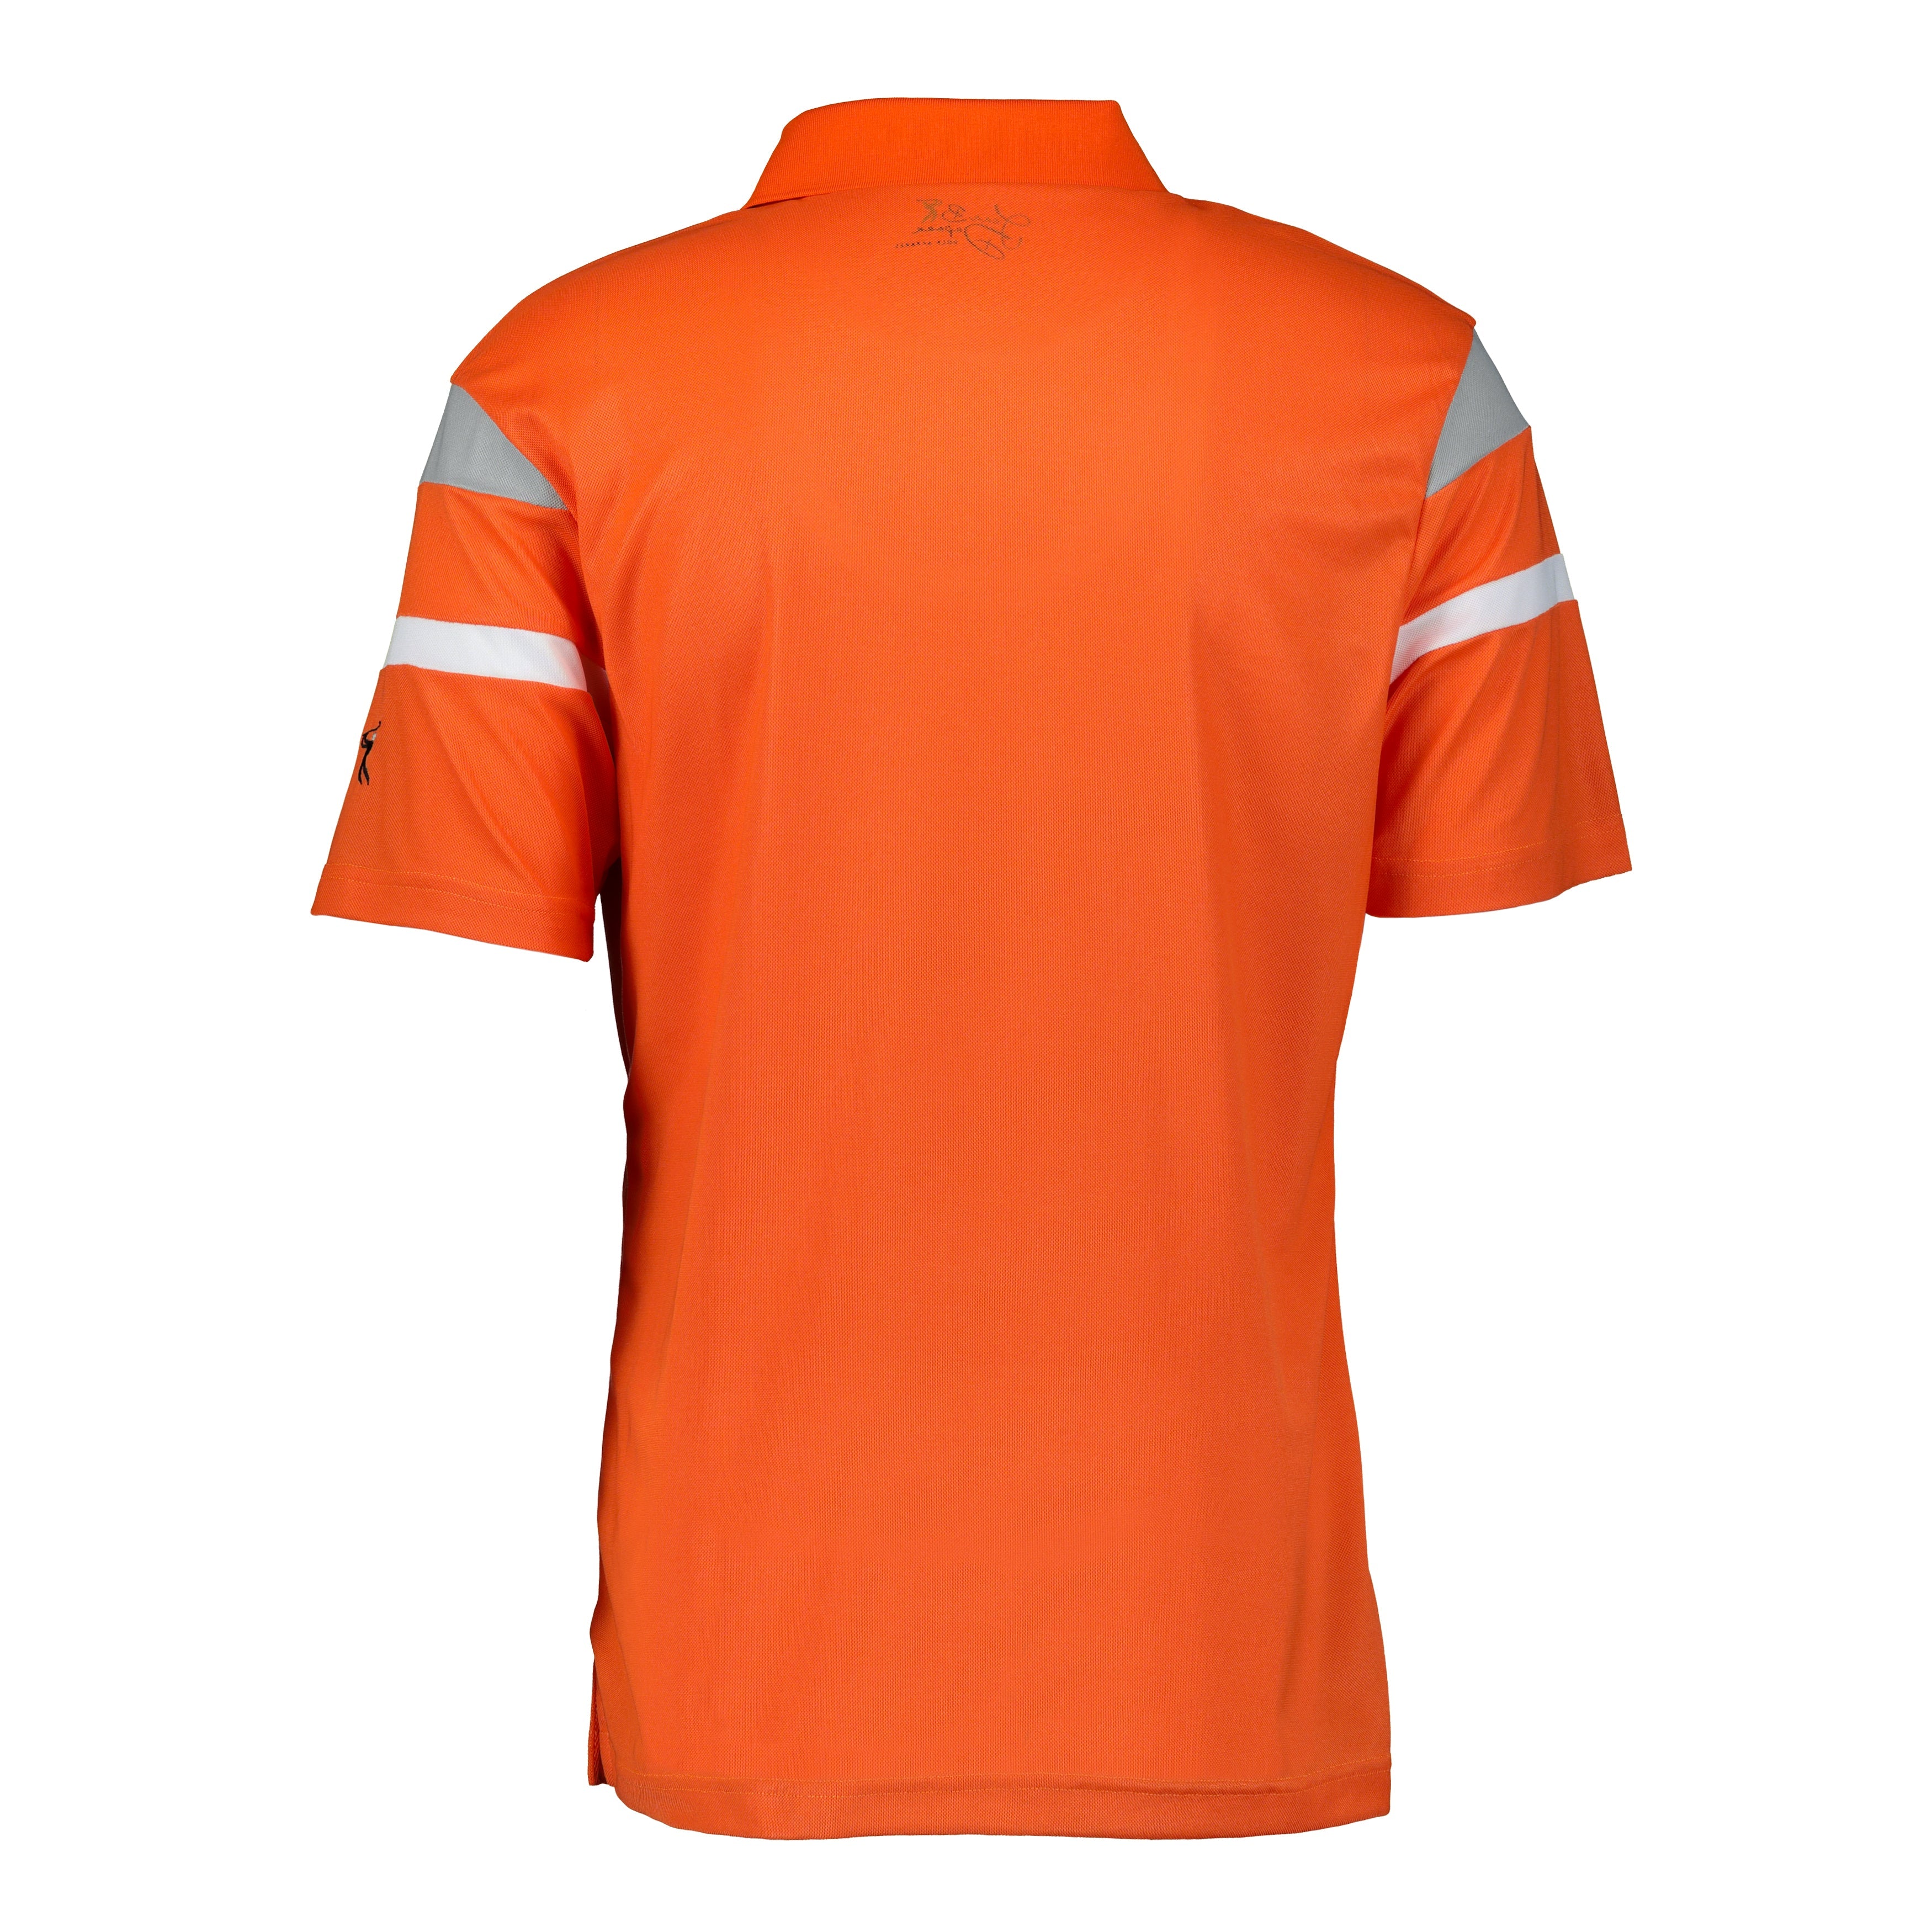 Dri-FIT Golf Shirts - Men’s Short Sleeve Stripe - Standard Fit Short Sleeve Golf Shirt - mygolfshirts.com